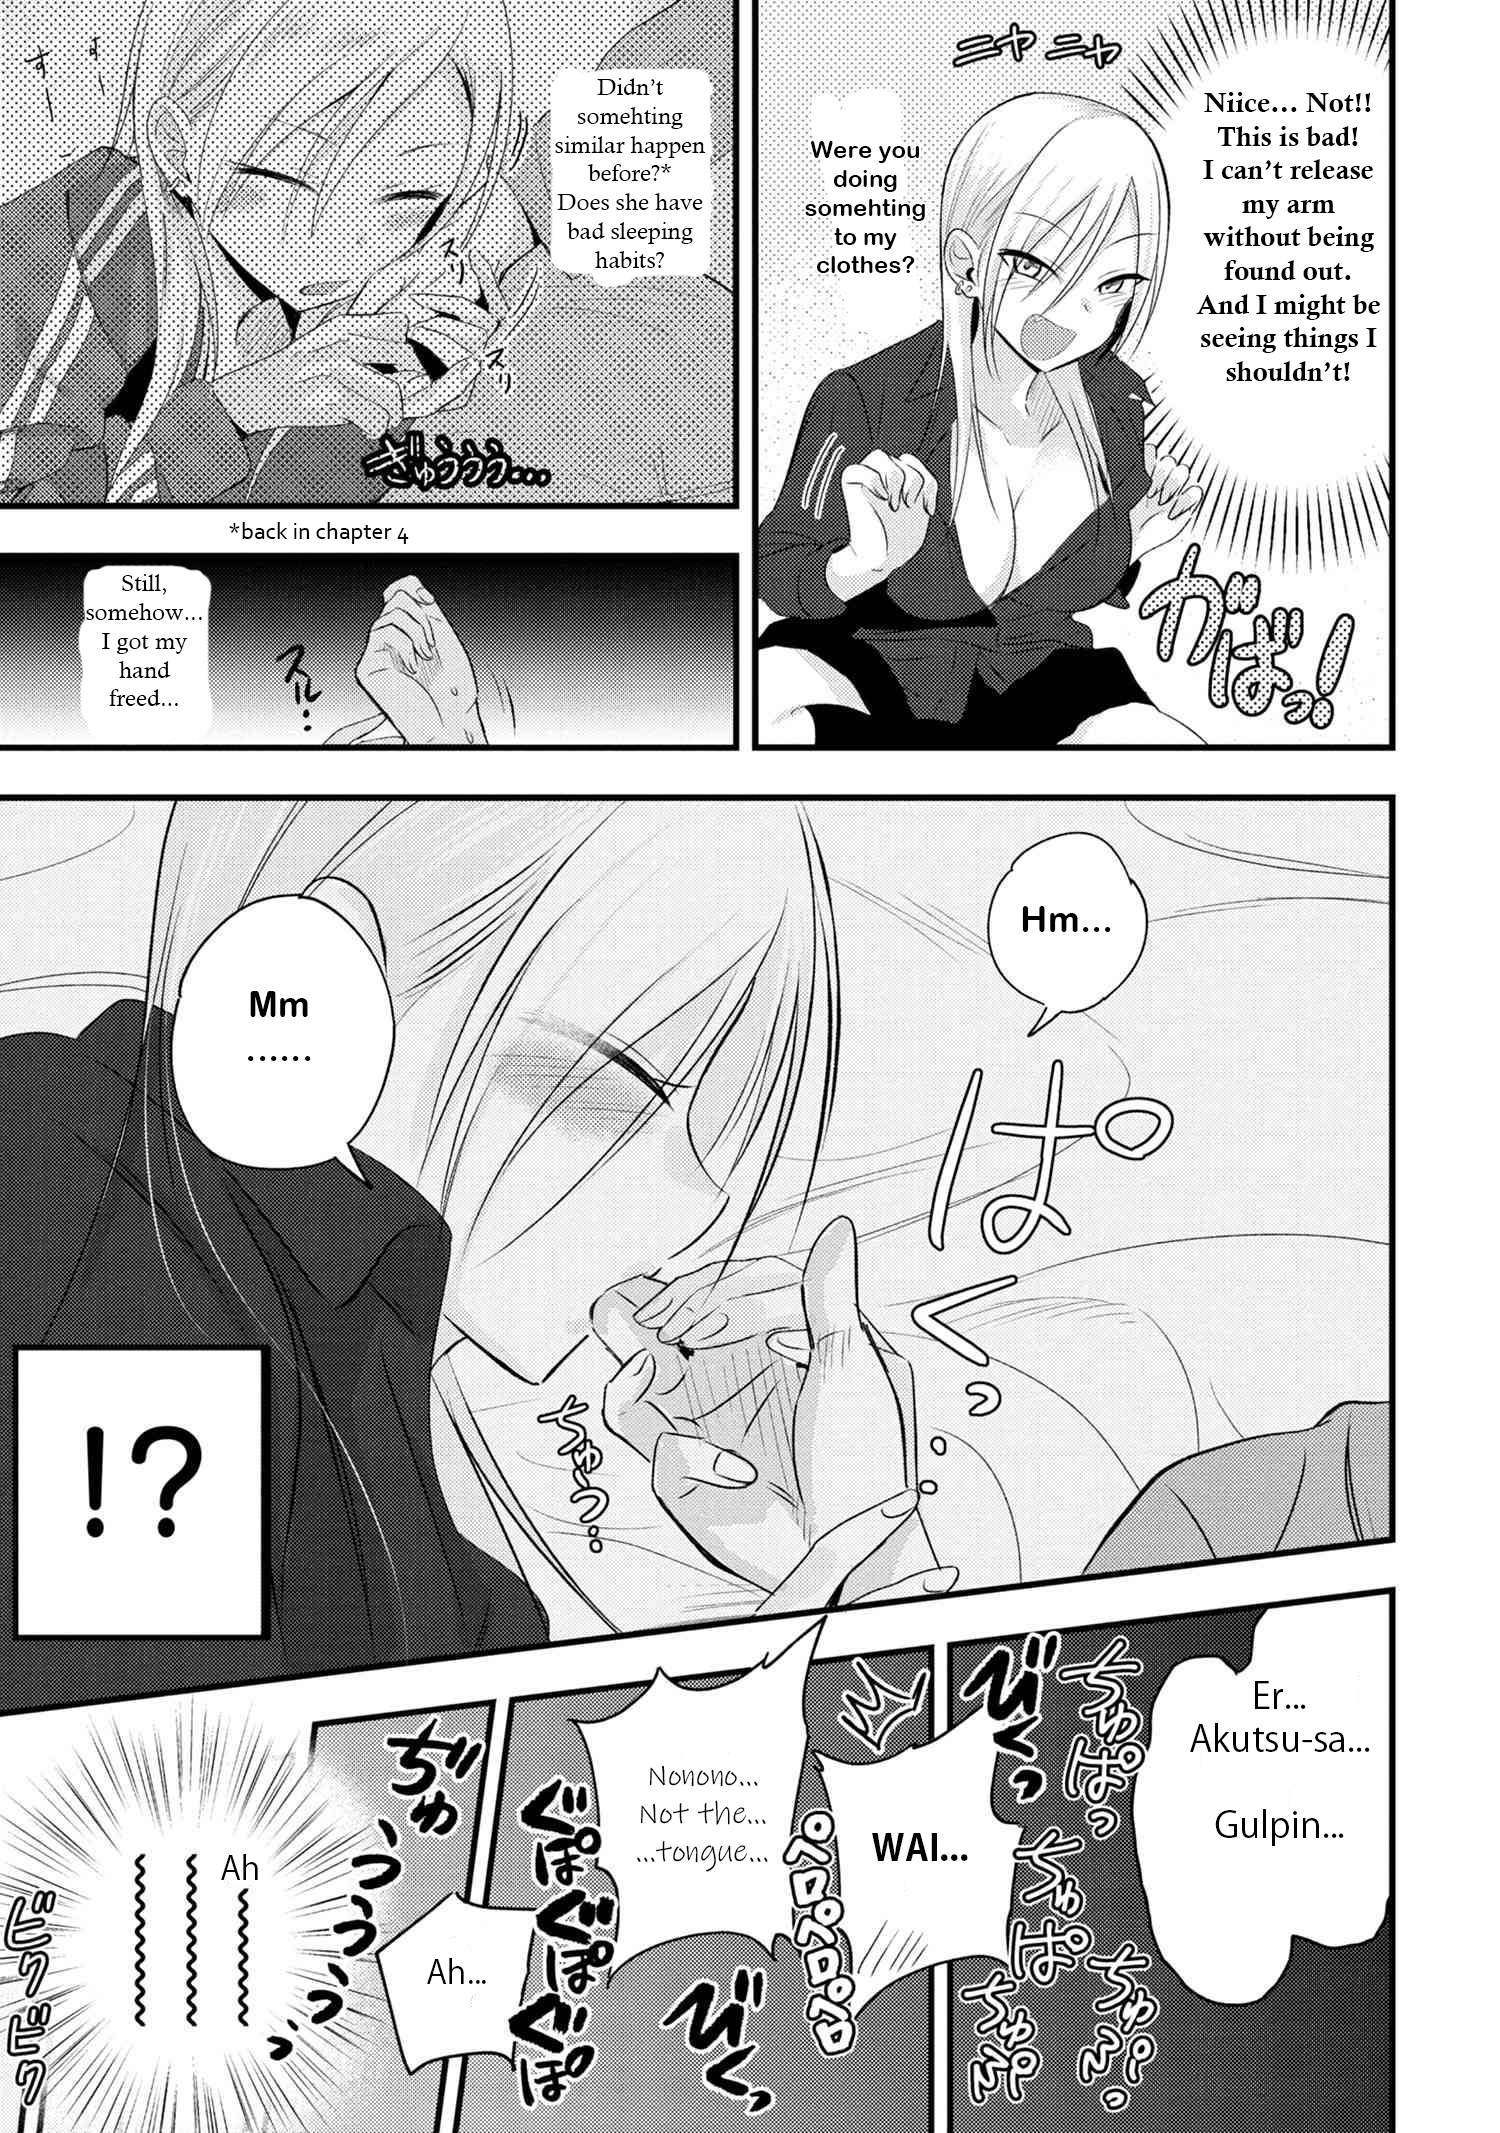 Please Go Home, Akutsu-San! Vol.2 Chapter 29 - Picture 3